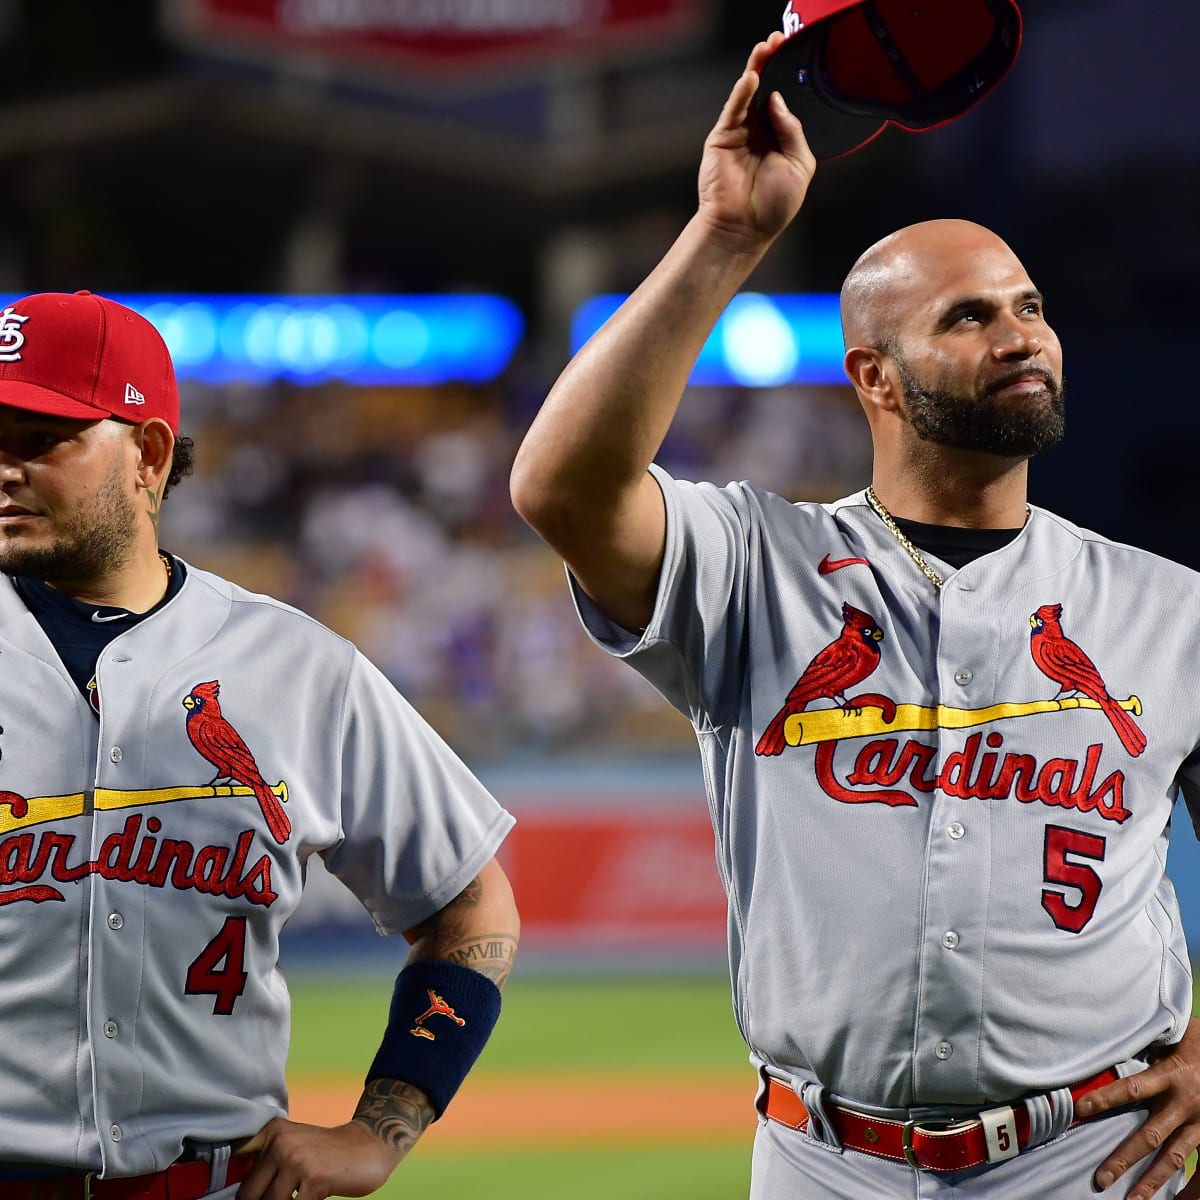 October 2, 2022: Cardinals bid farewell to Pujols and Molina